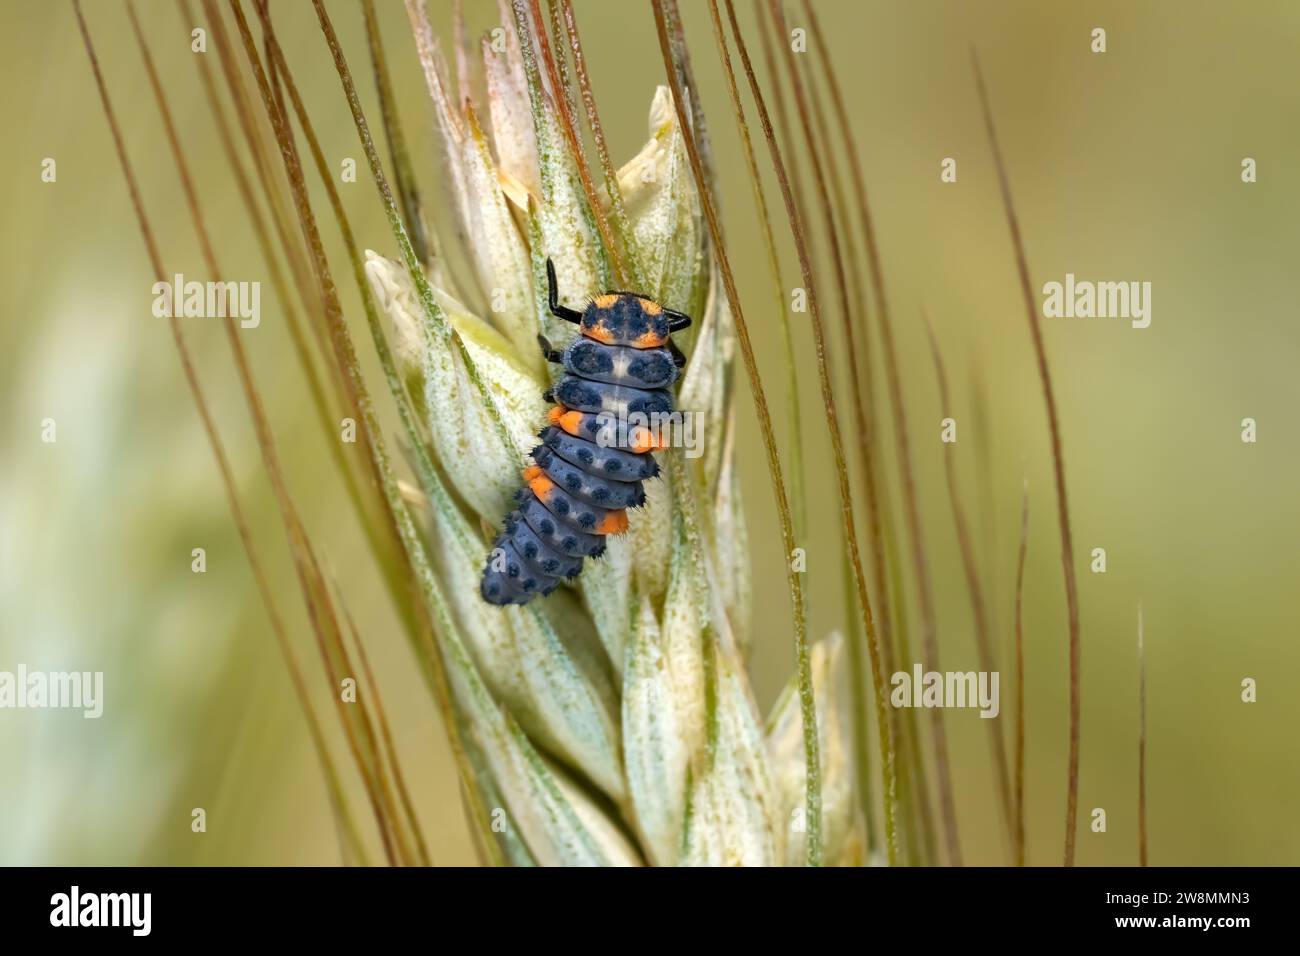 Larva of Seven spot ladybird (Coccinella septempunctata) on an ear of grain Stock Photo